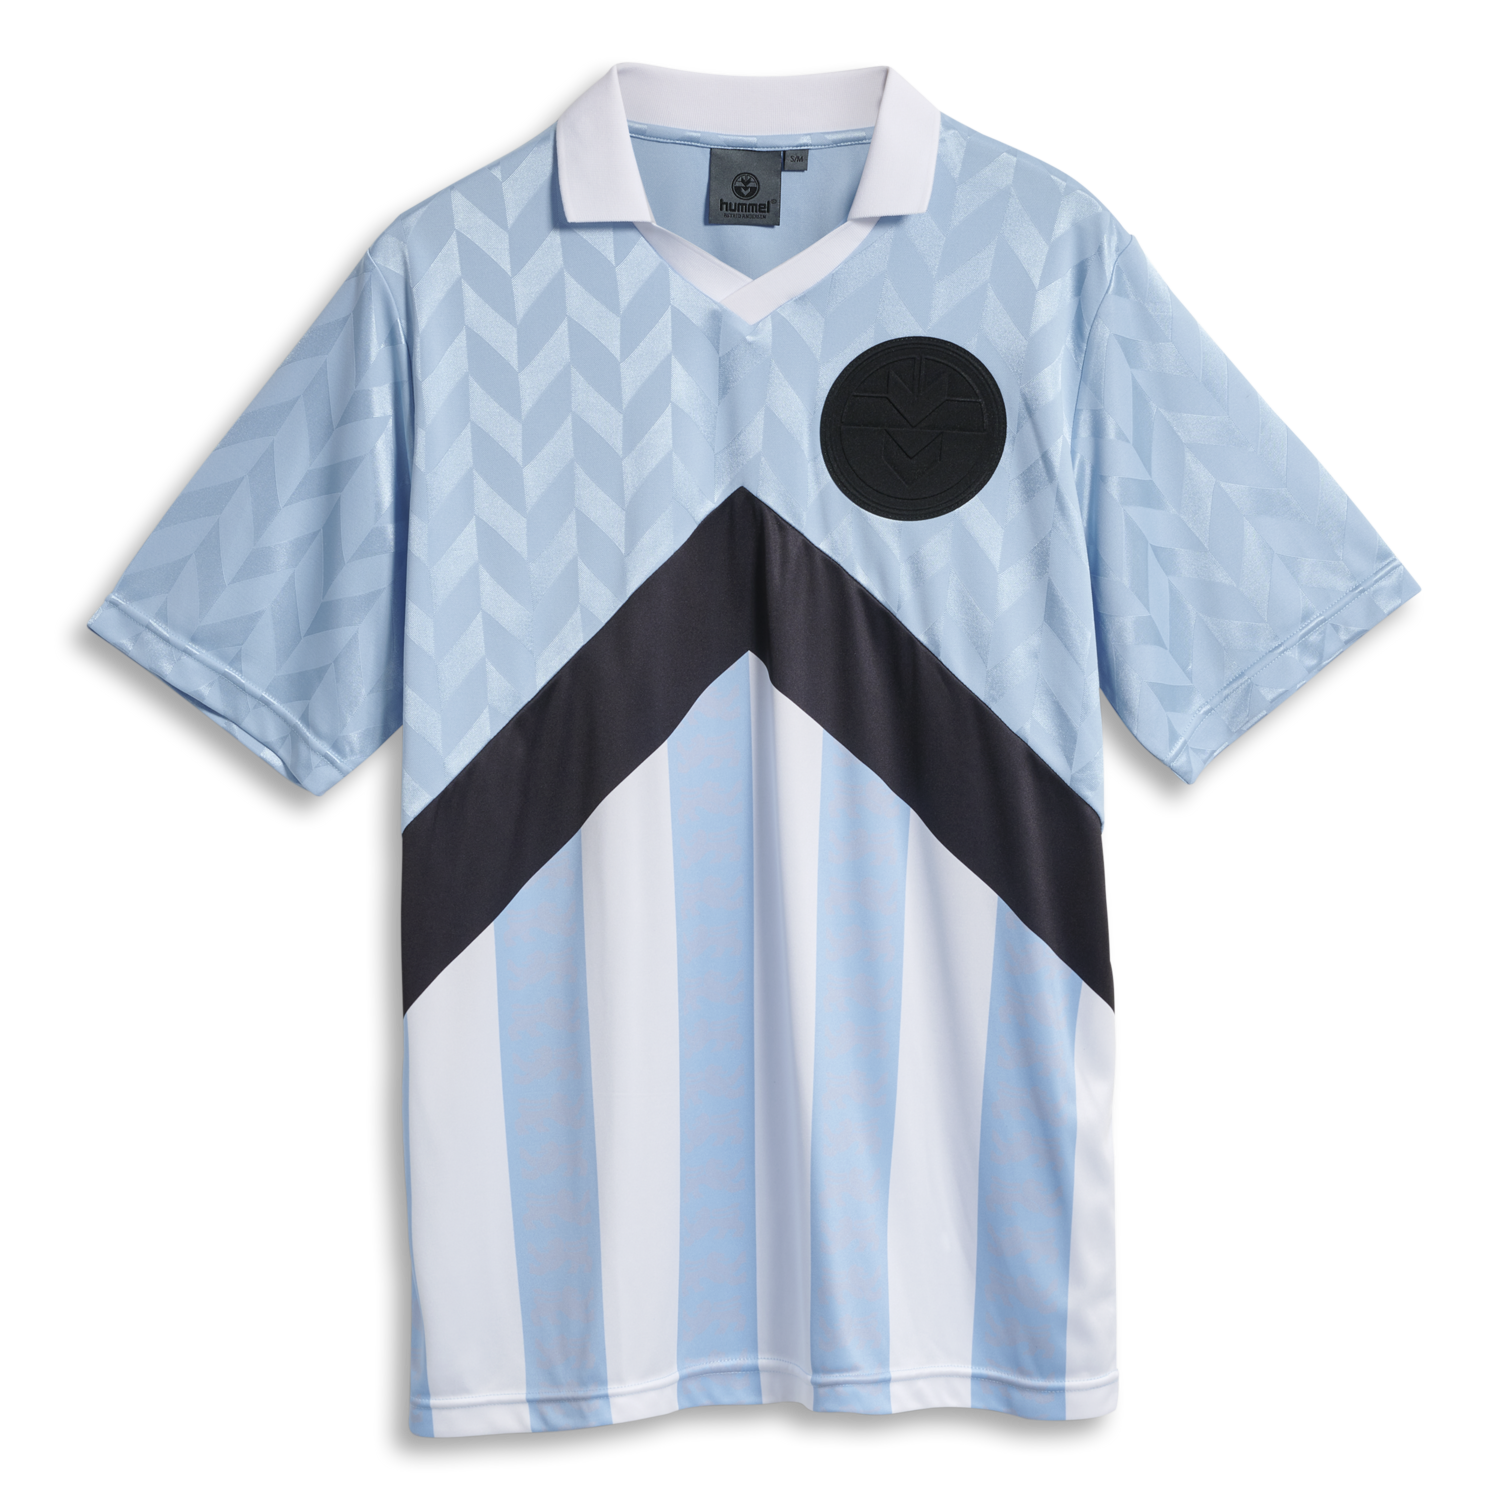 argentina shirt